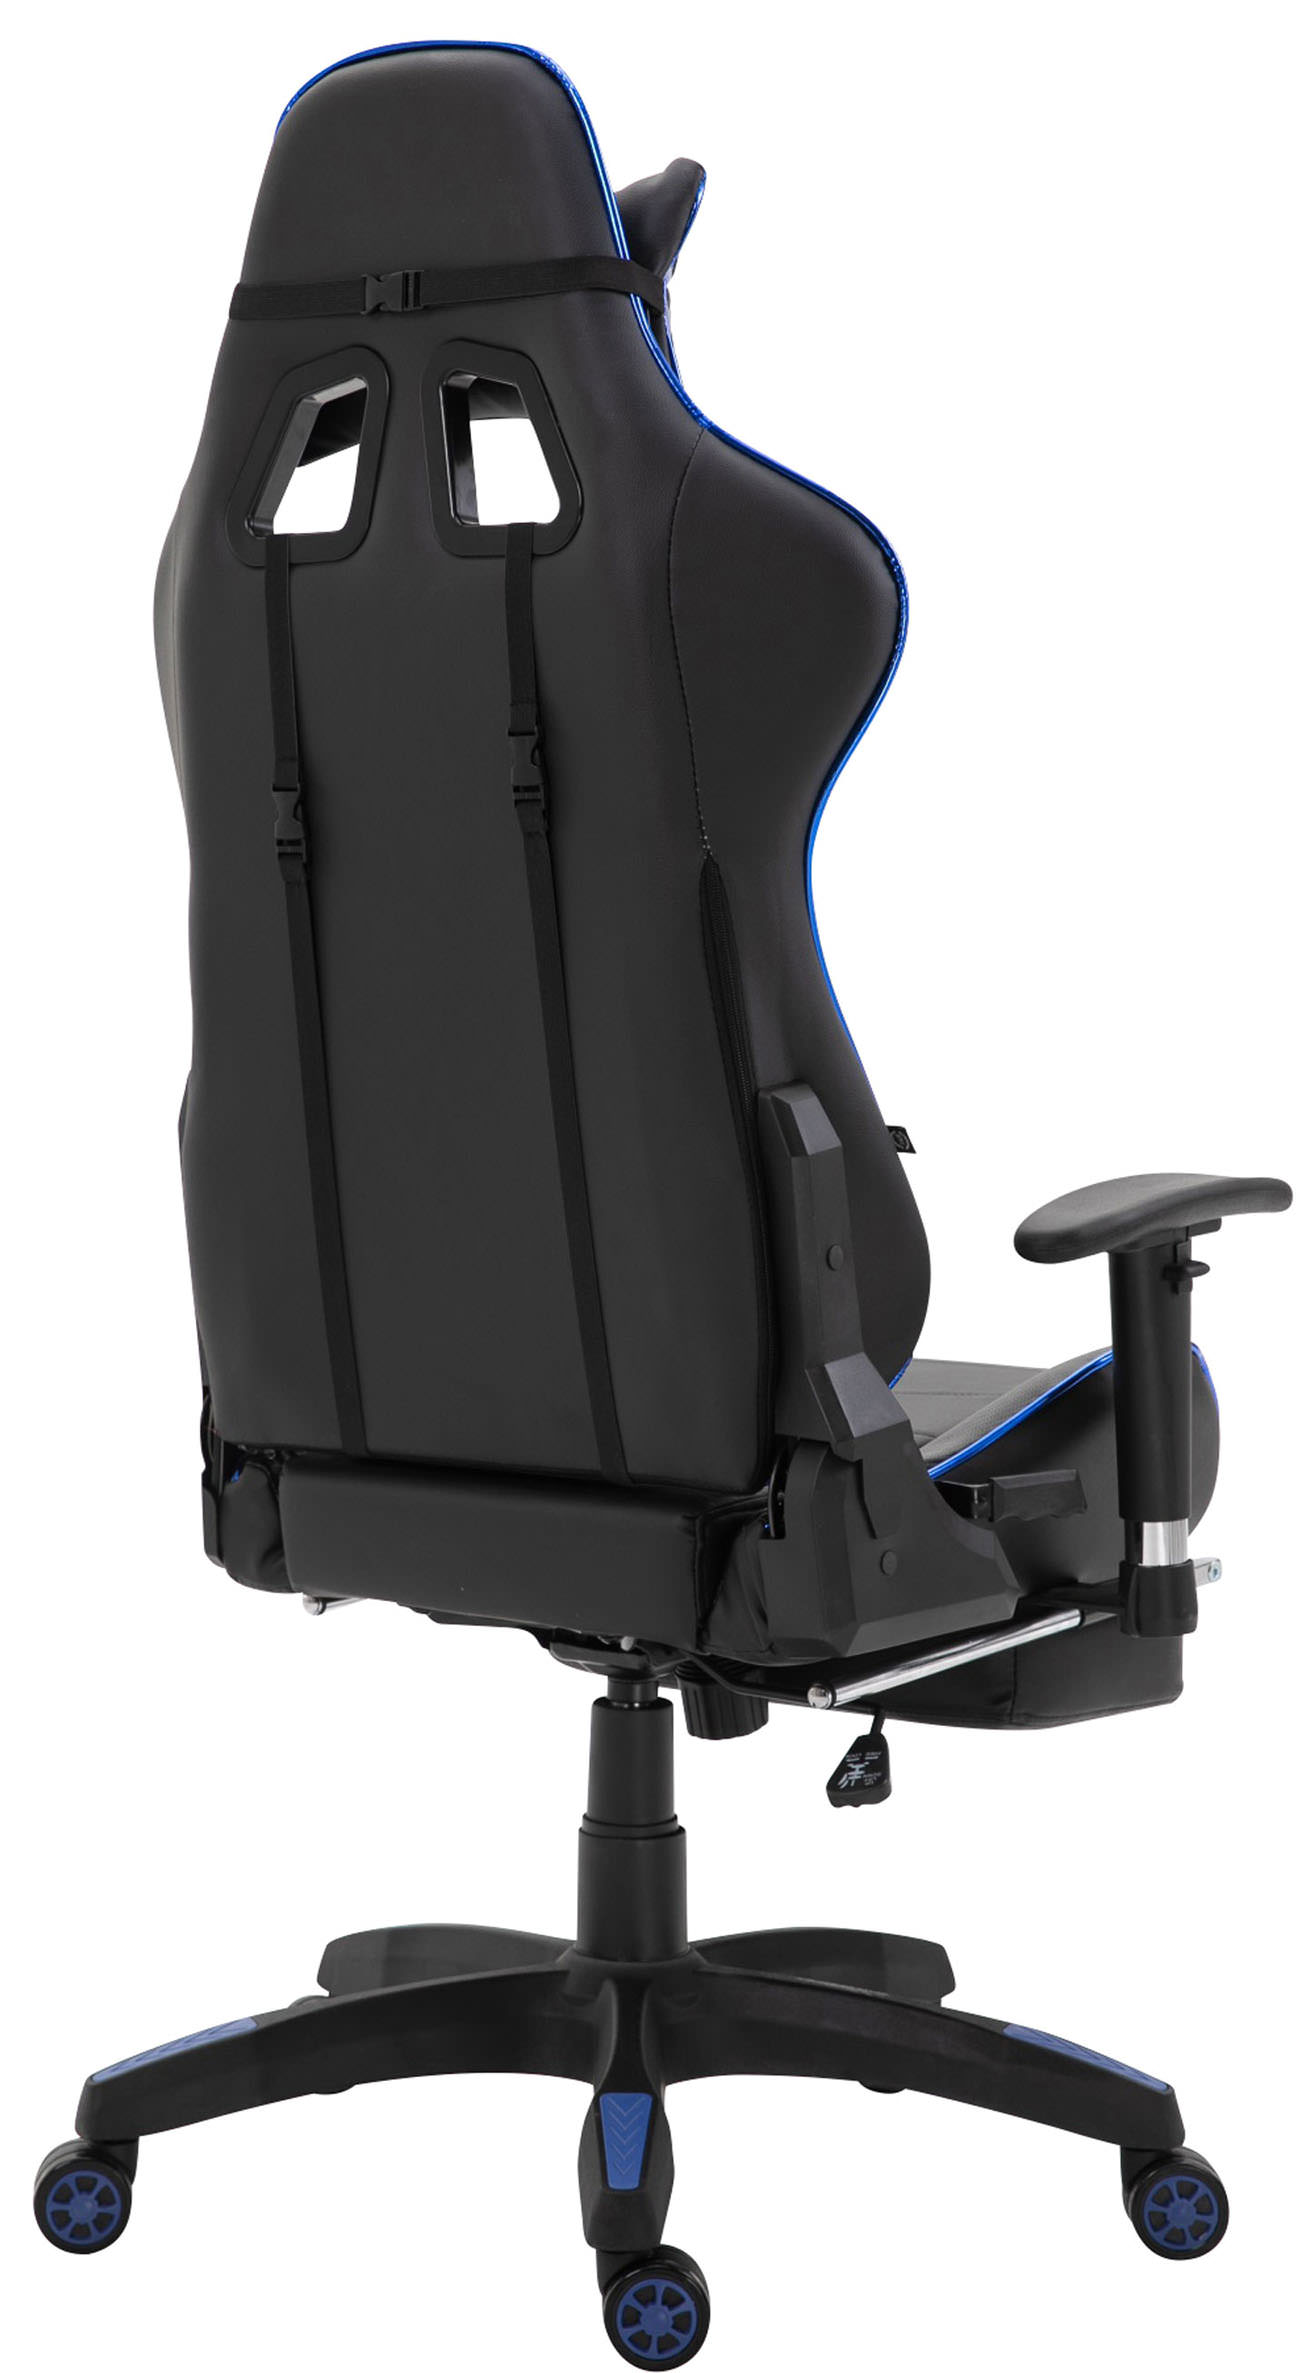 Fußablage mit CLP Chair, Turbo blau Gaming Racing Bürostuhl schwarz/glanz